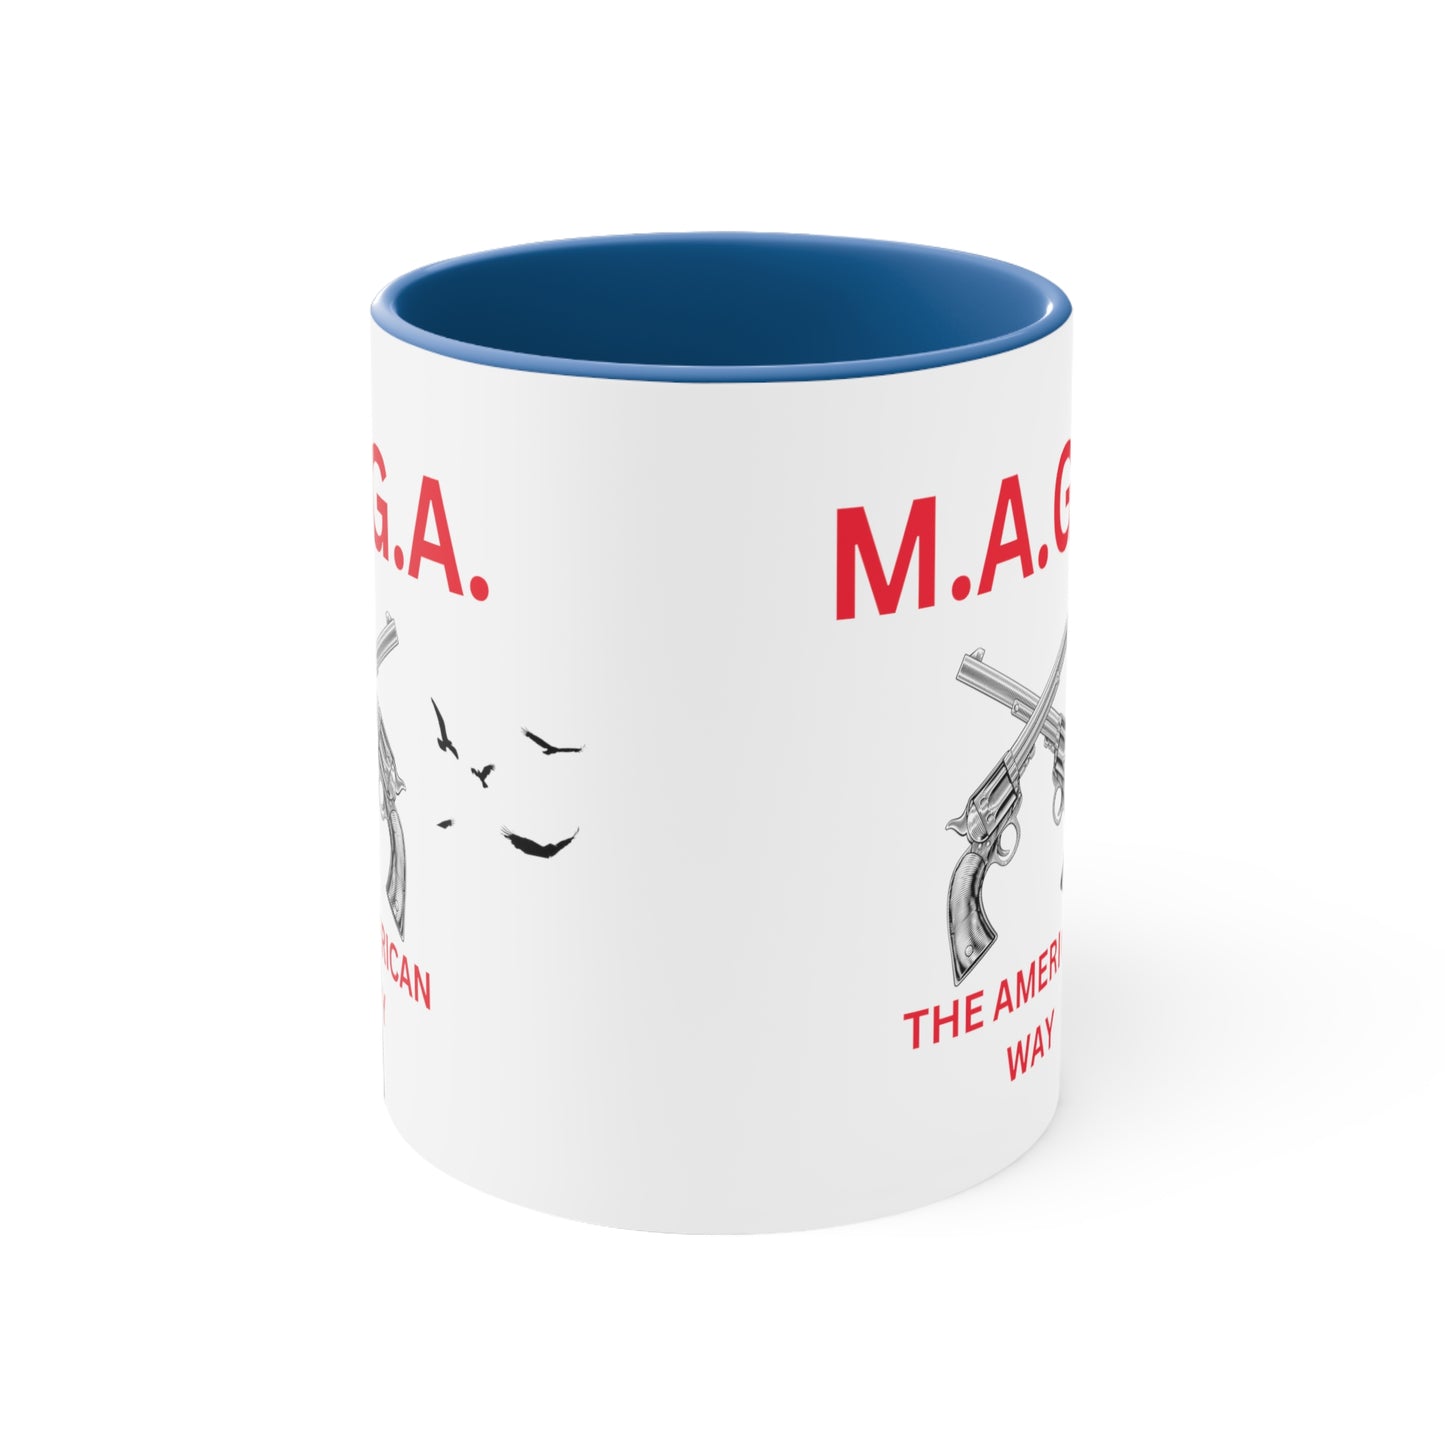 MAGA Accent Coffee Mug, 11oz